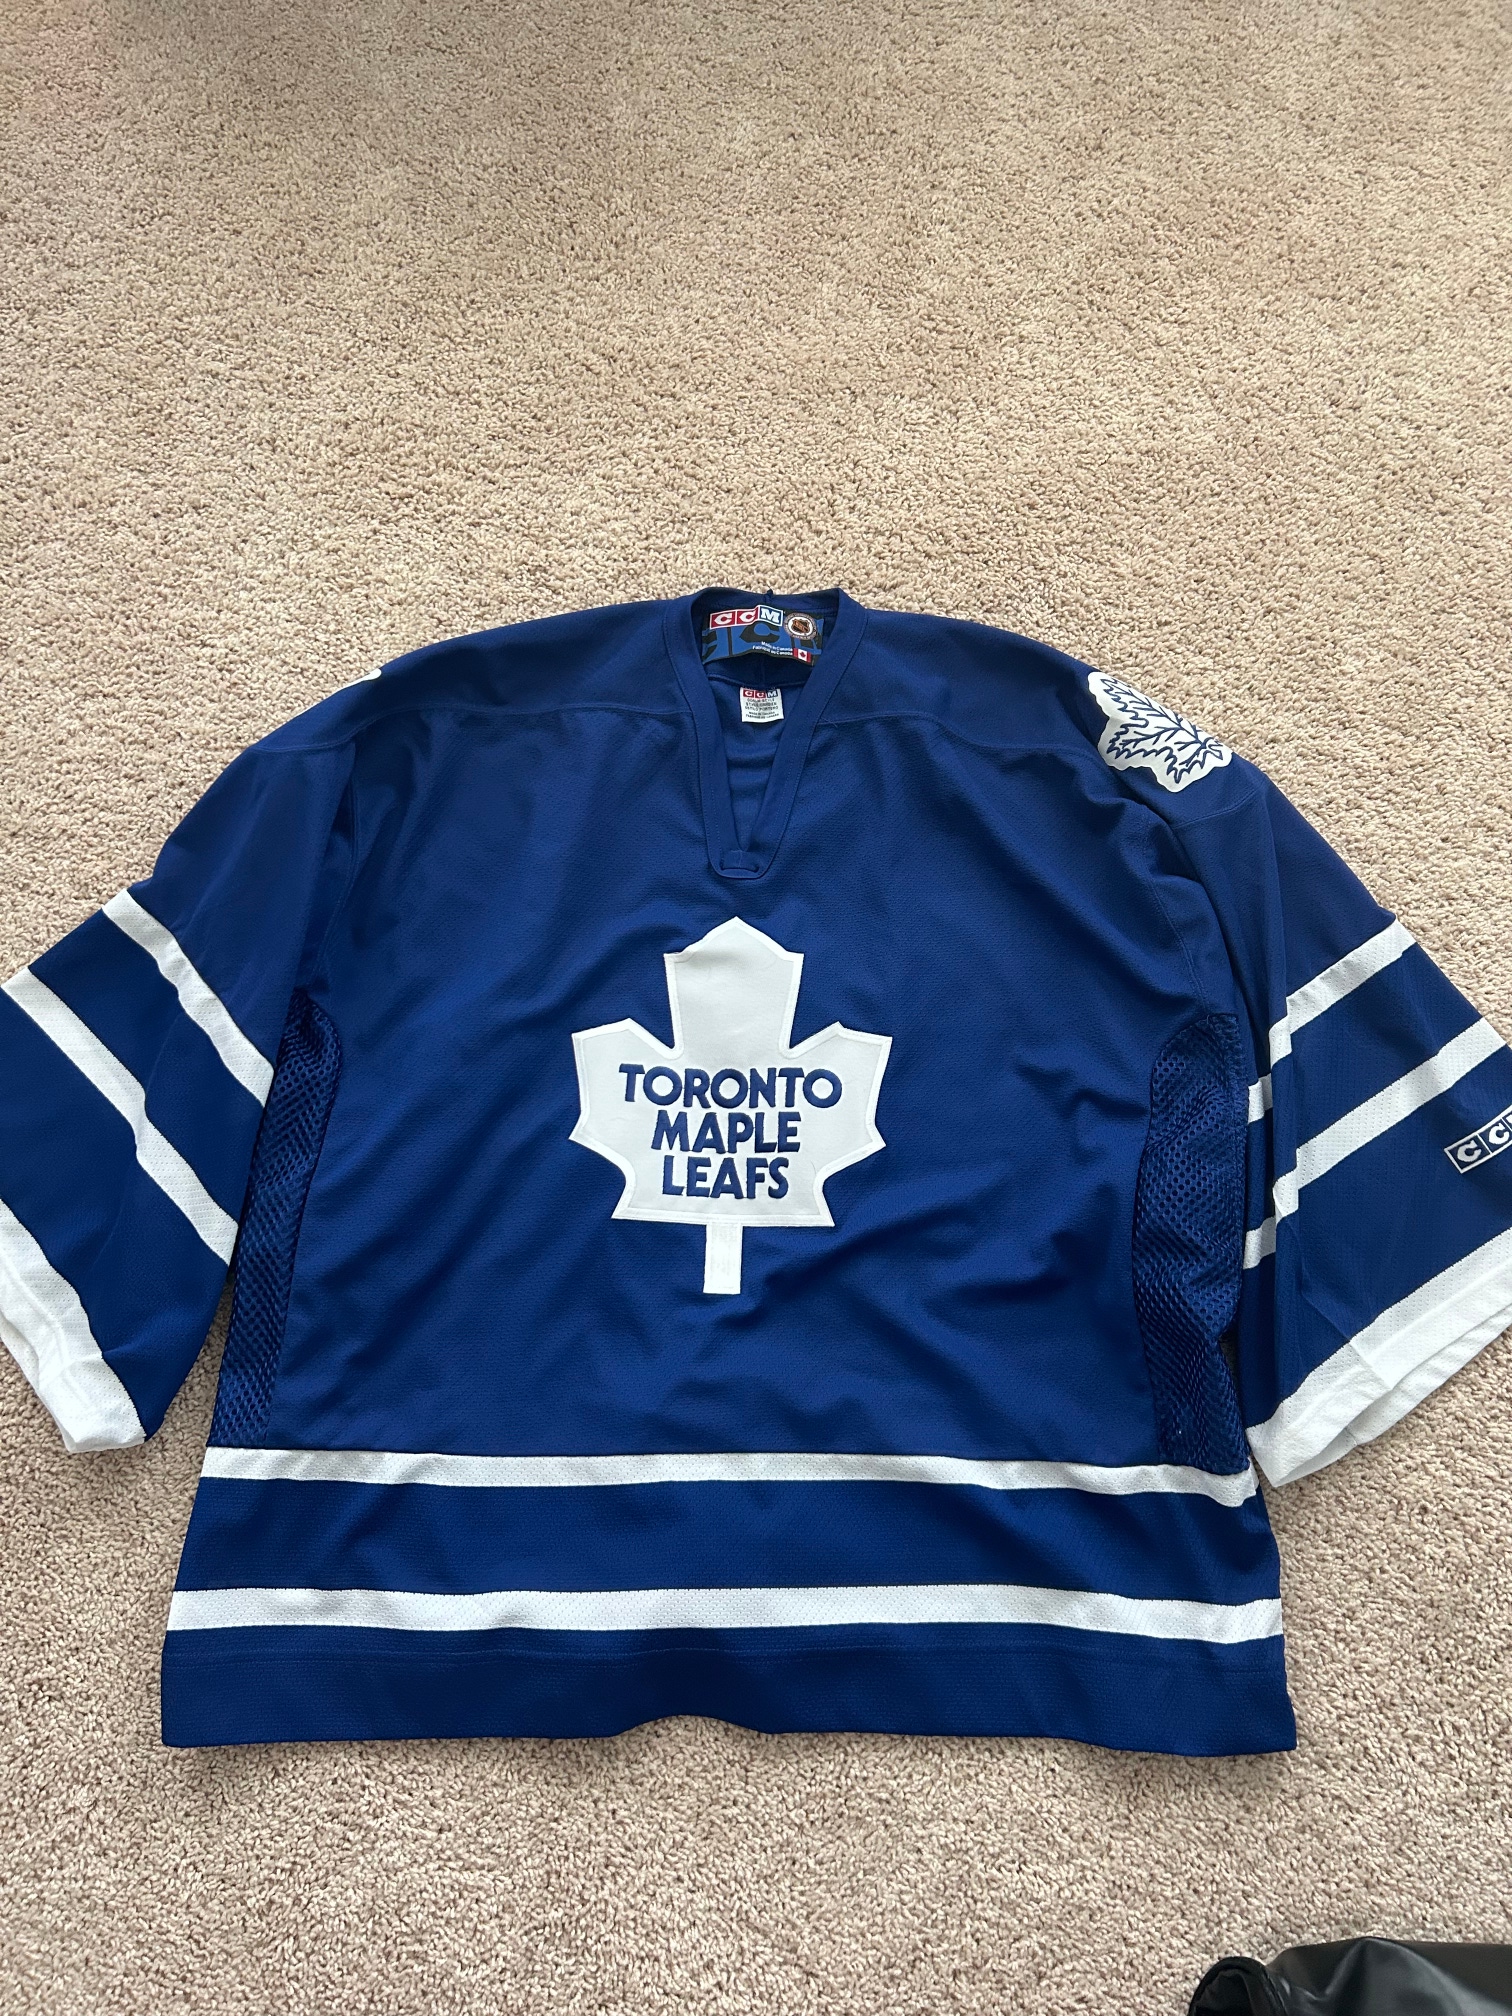 Toronto Maple Leafs Goalie Cut Jersey CCM